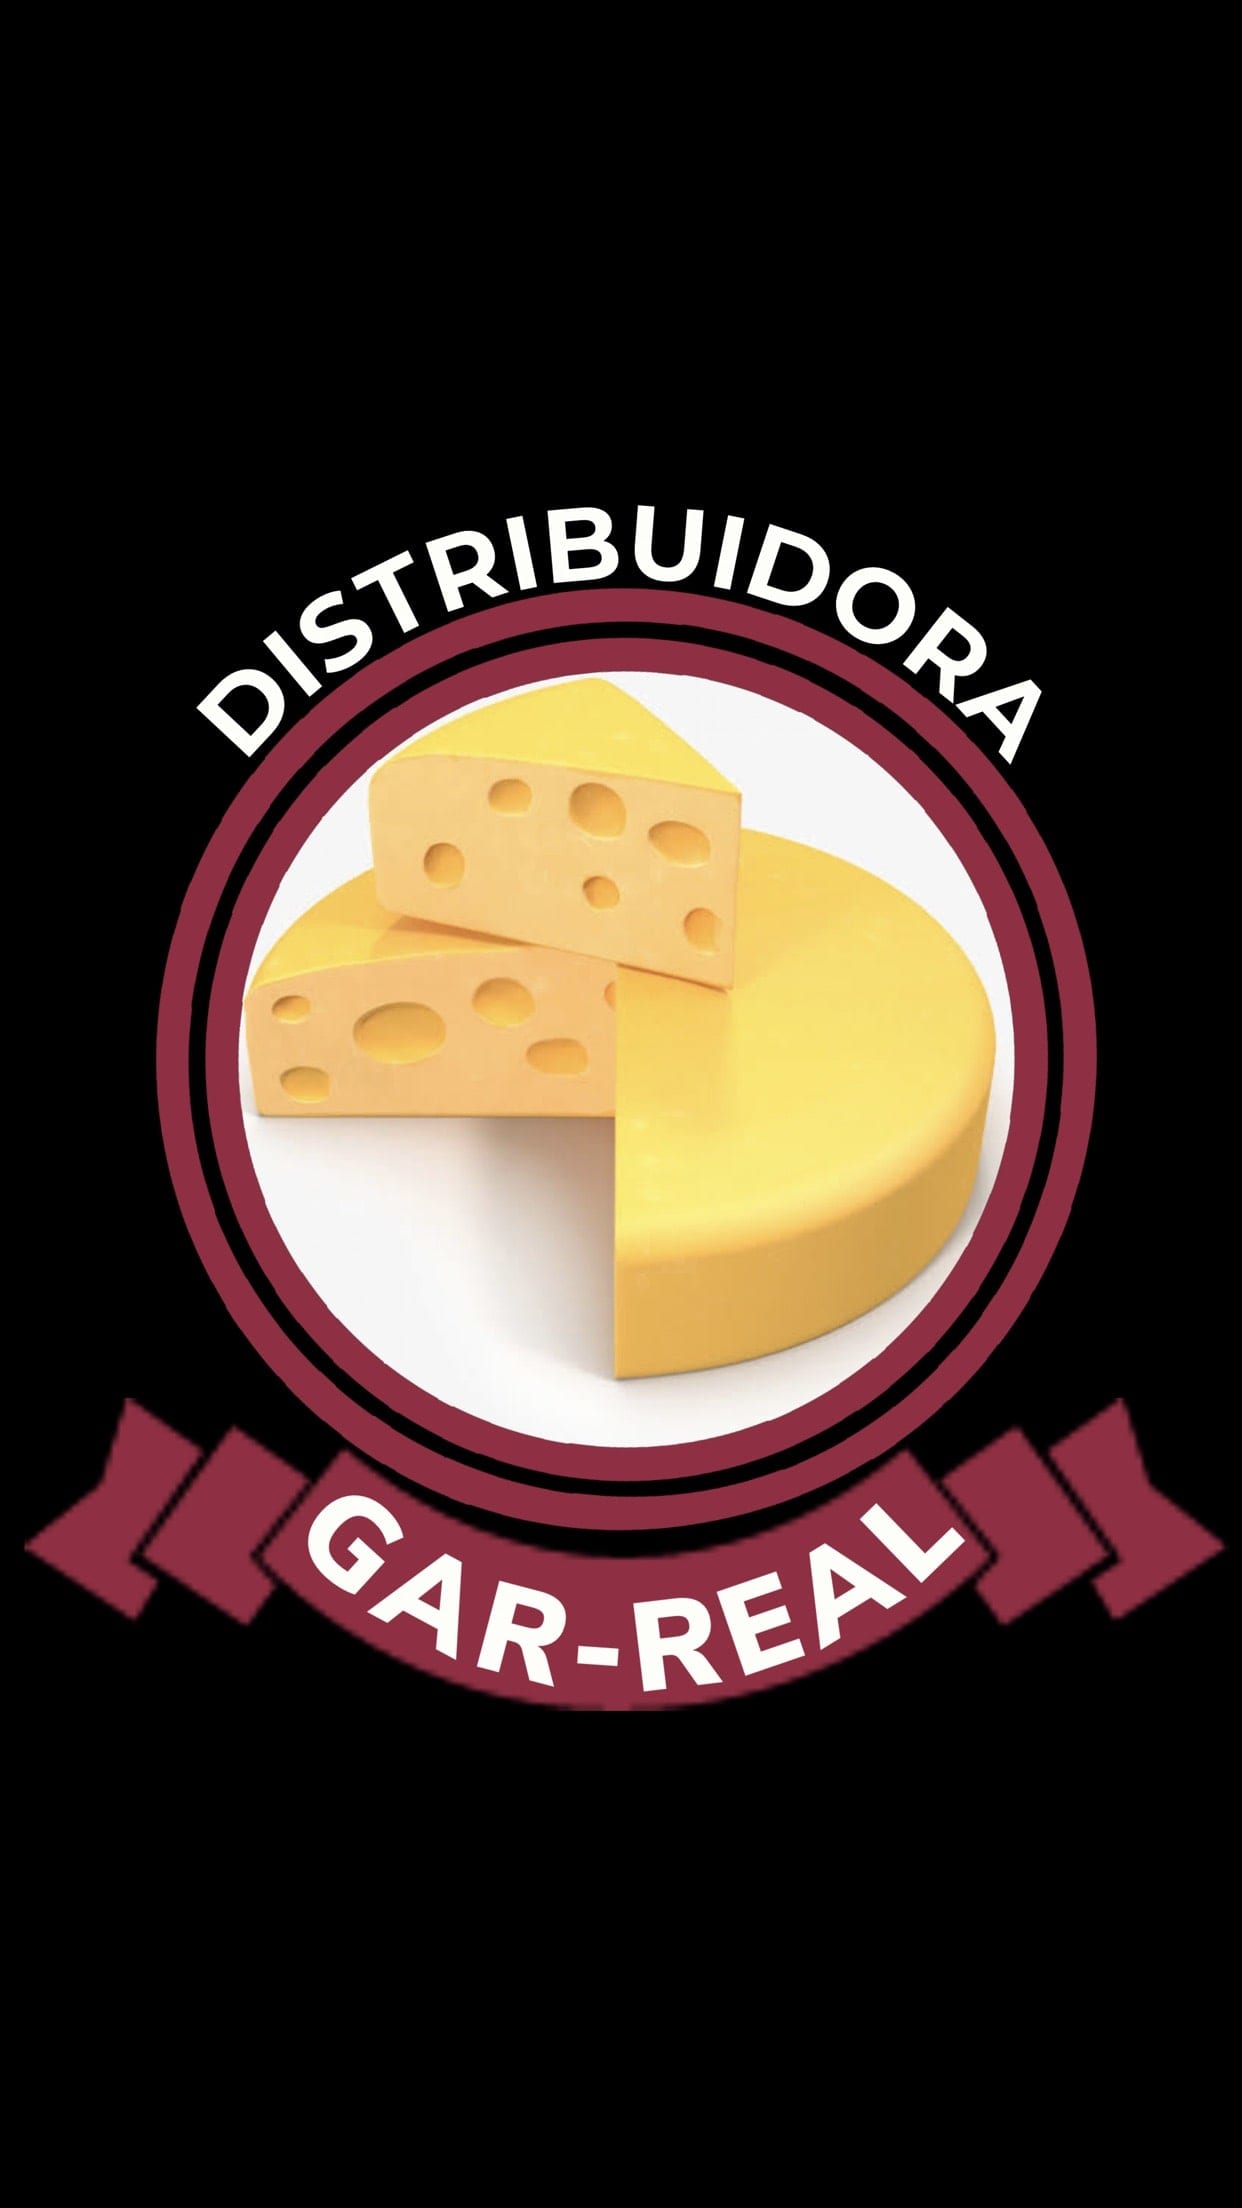 Distribuidora Gar-real